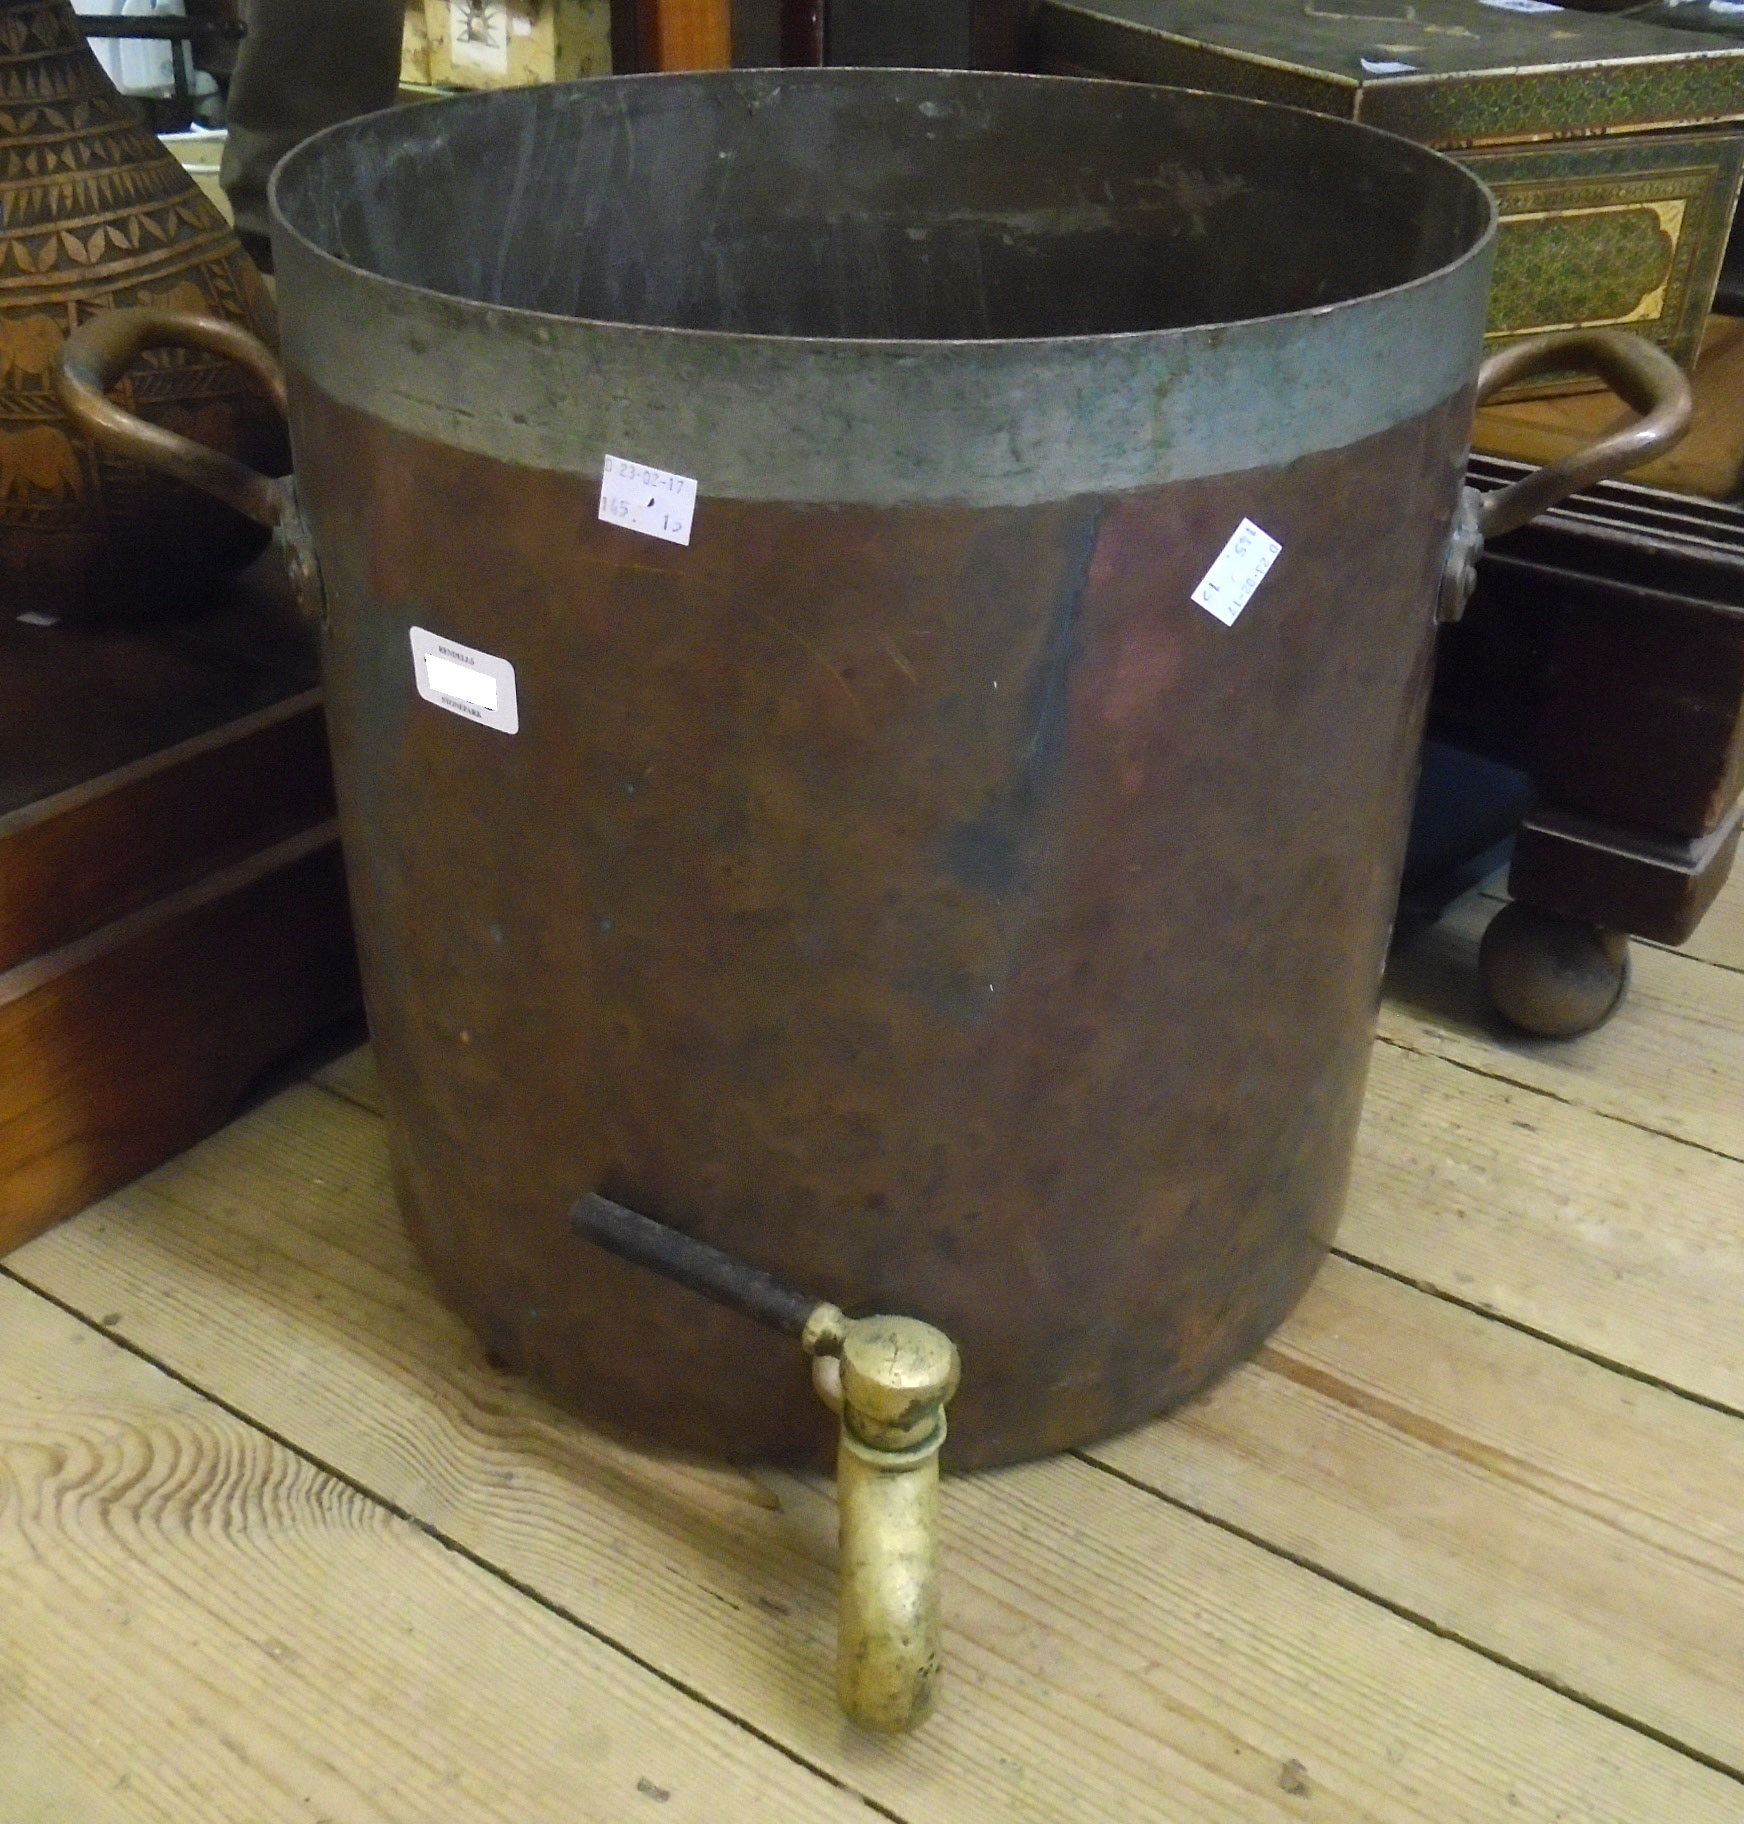 A copper tea urn with spigot - lid missing